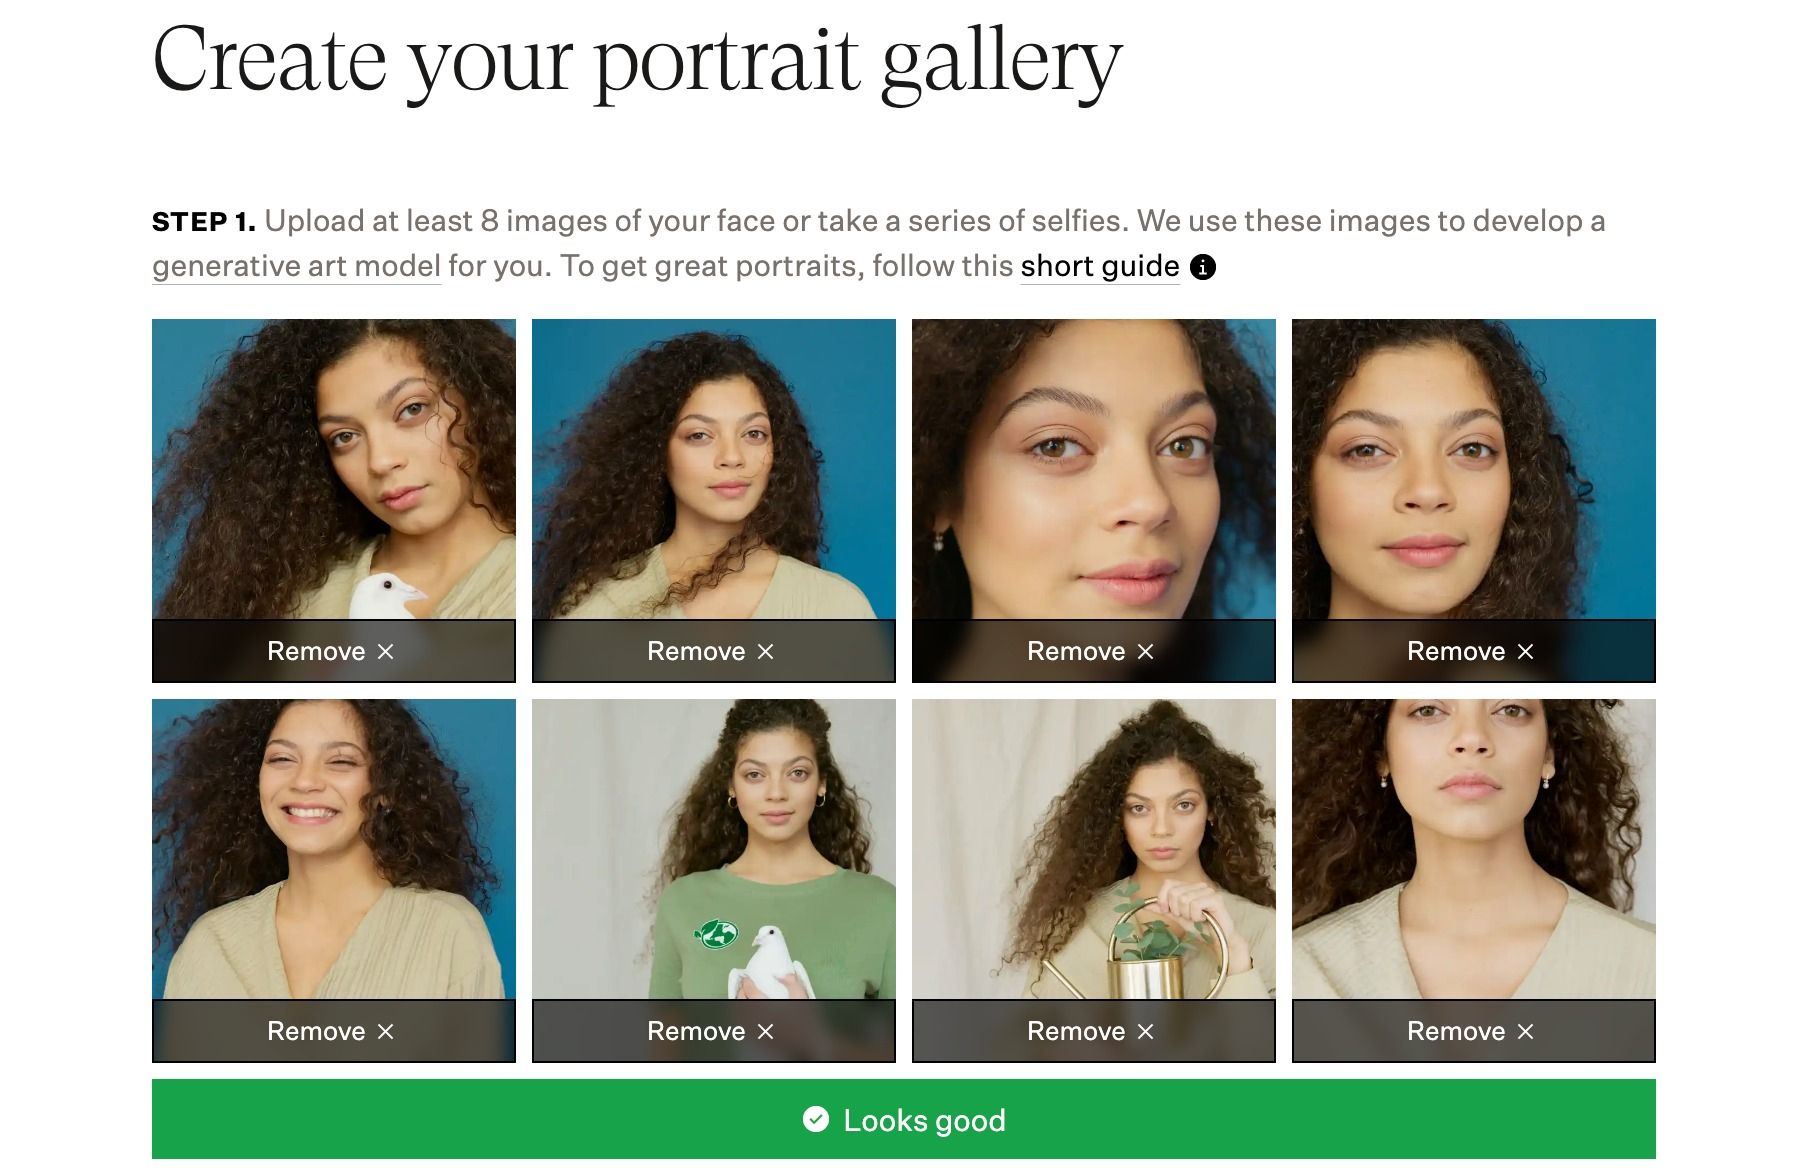 8 potret wanita di bawah teks yang berbunyi 